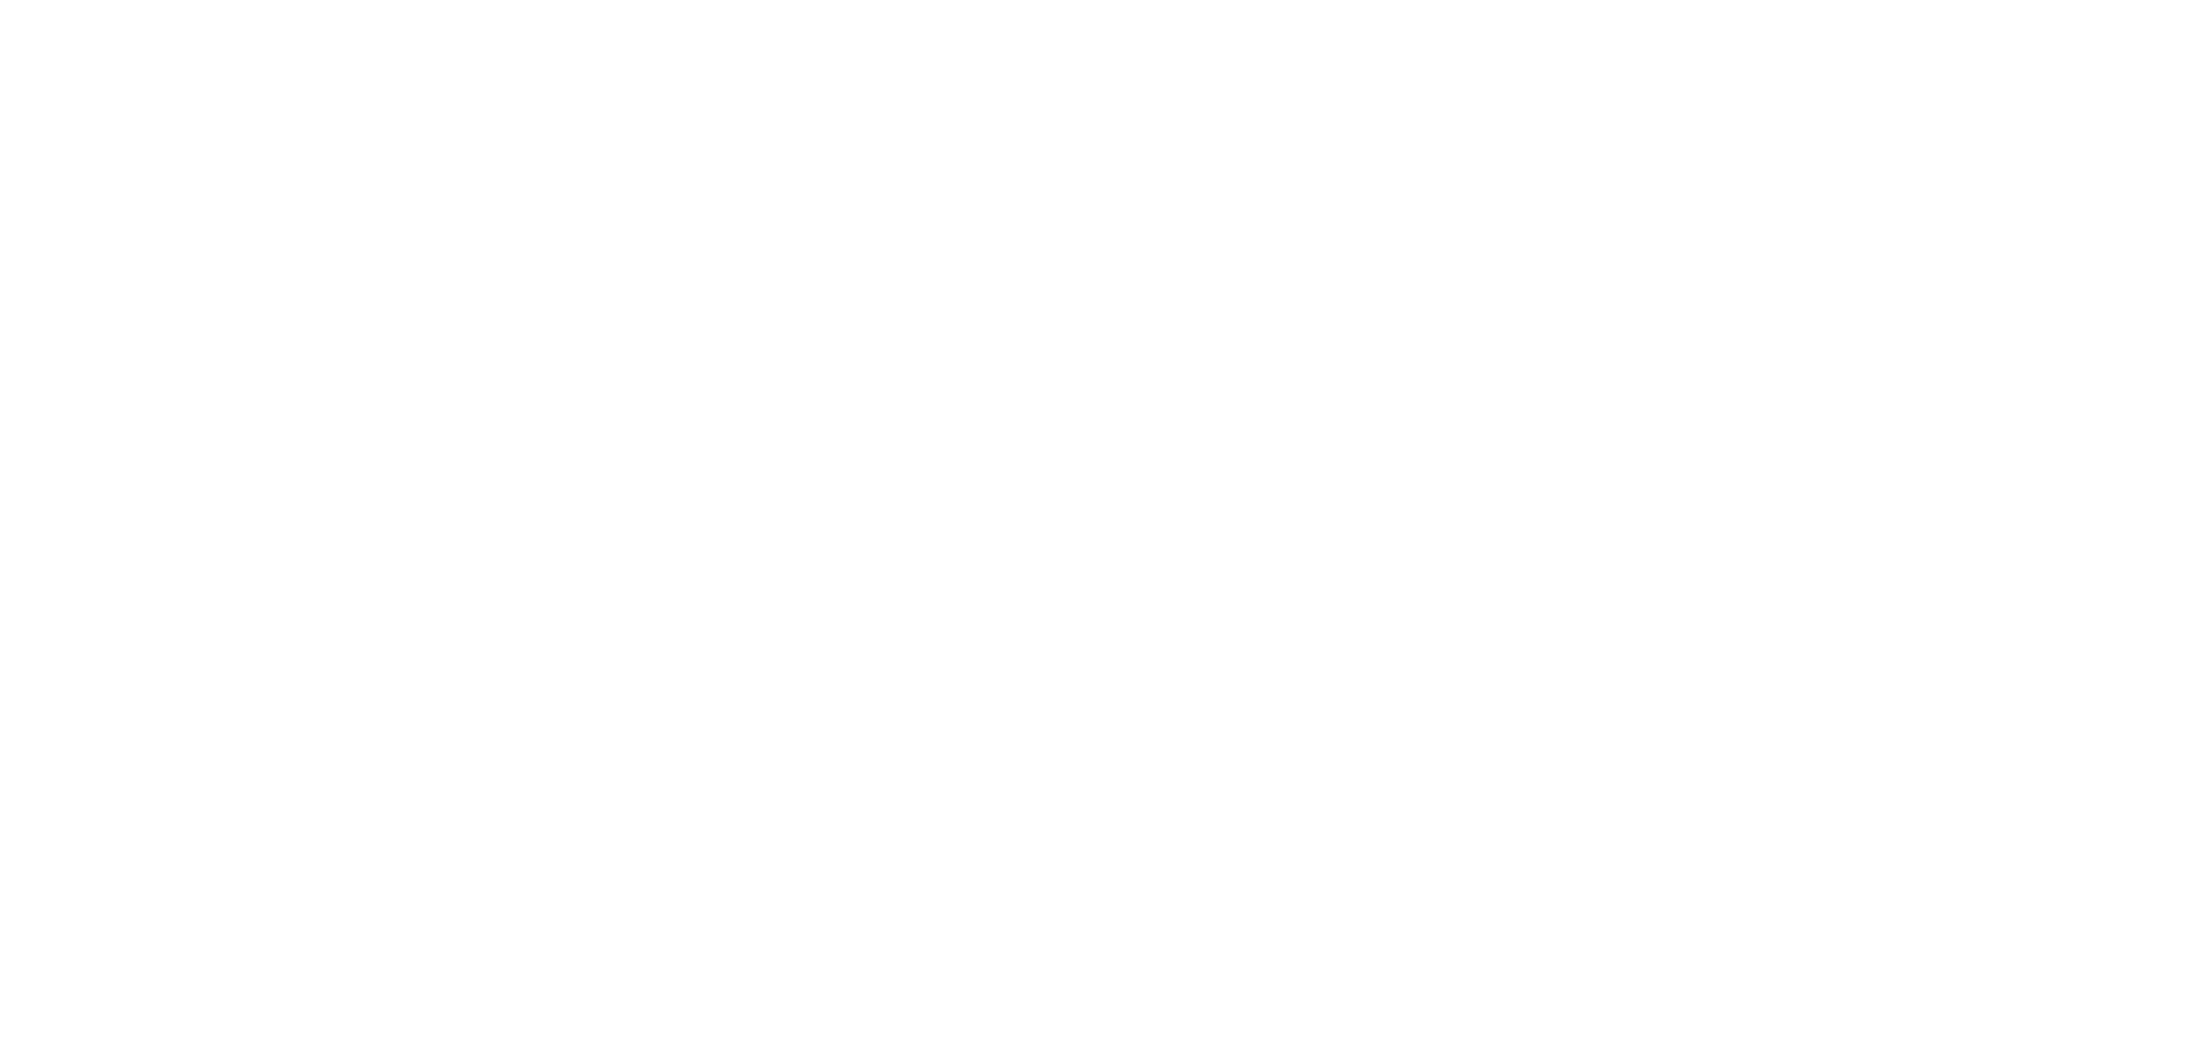 Madison Avenue Dental Studio